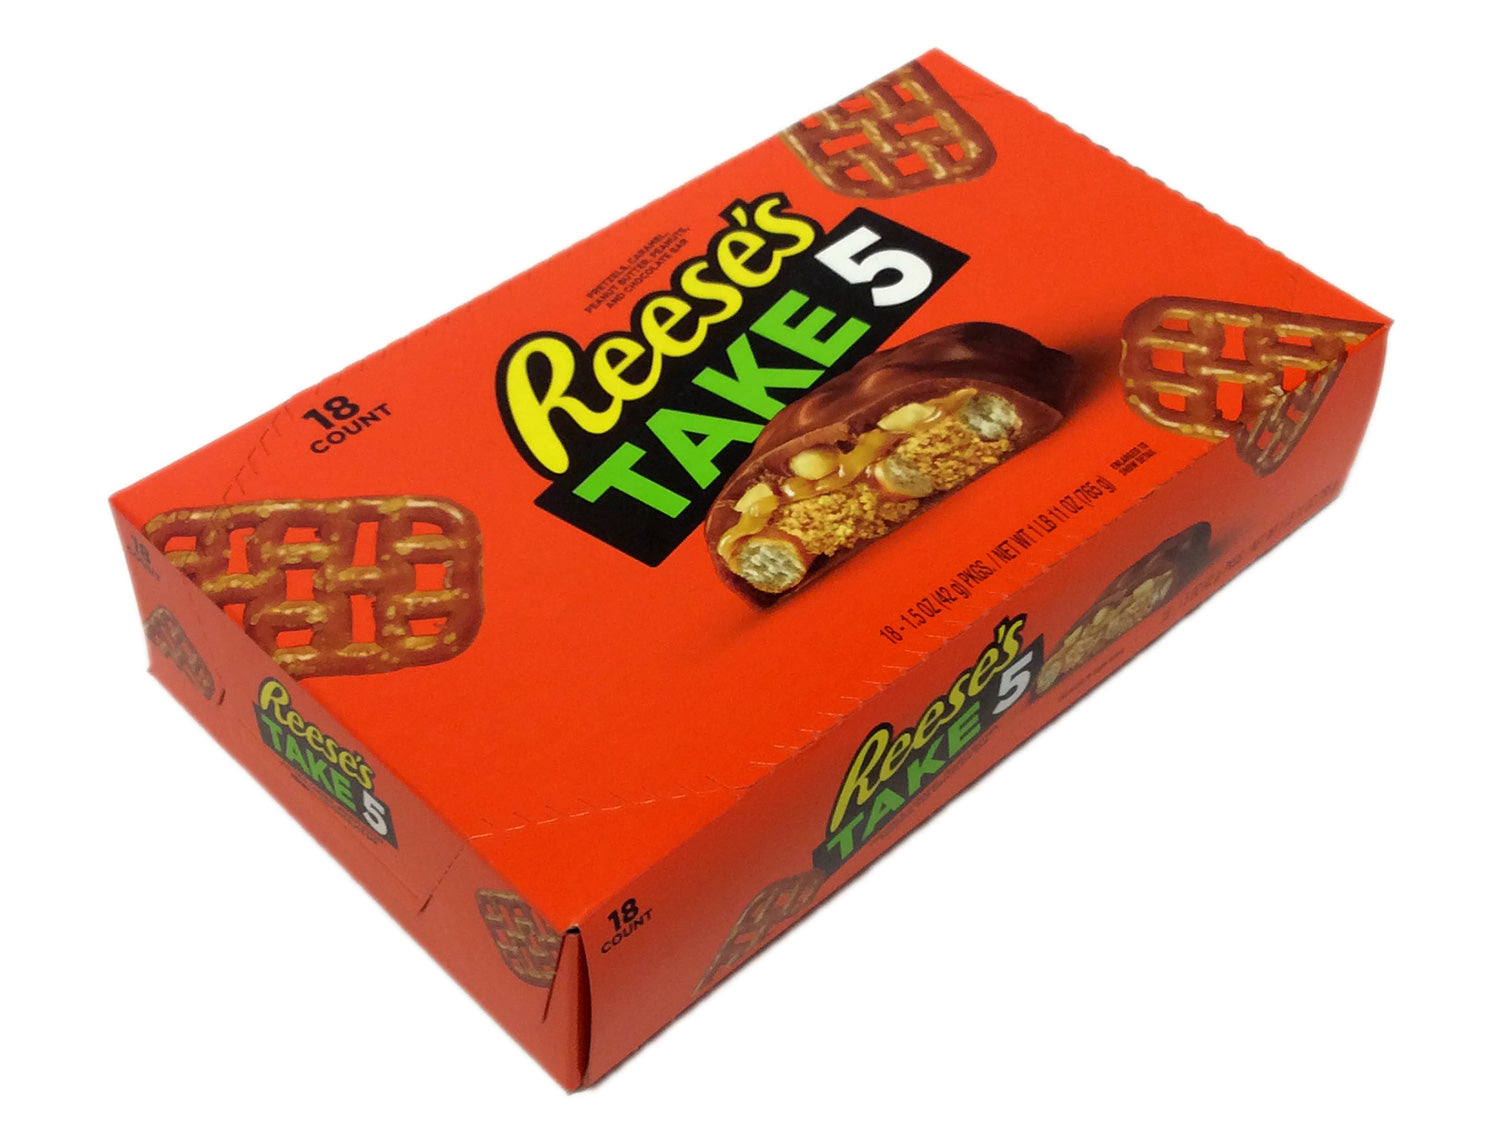 Reese's Take 5 - 1.5 oz - box of 18